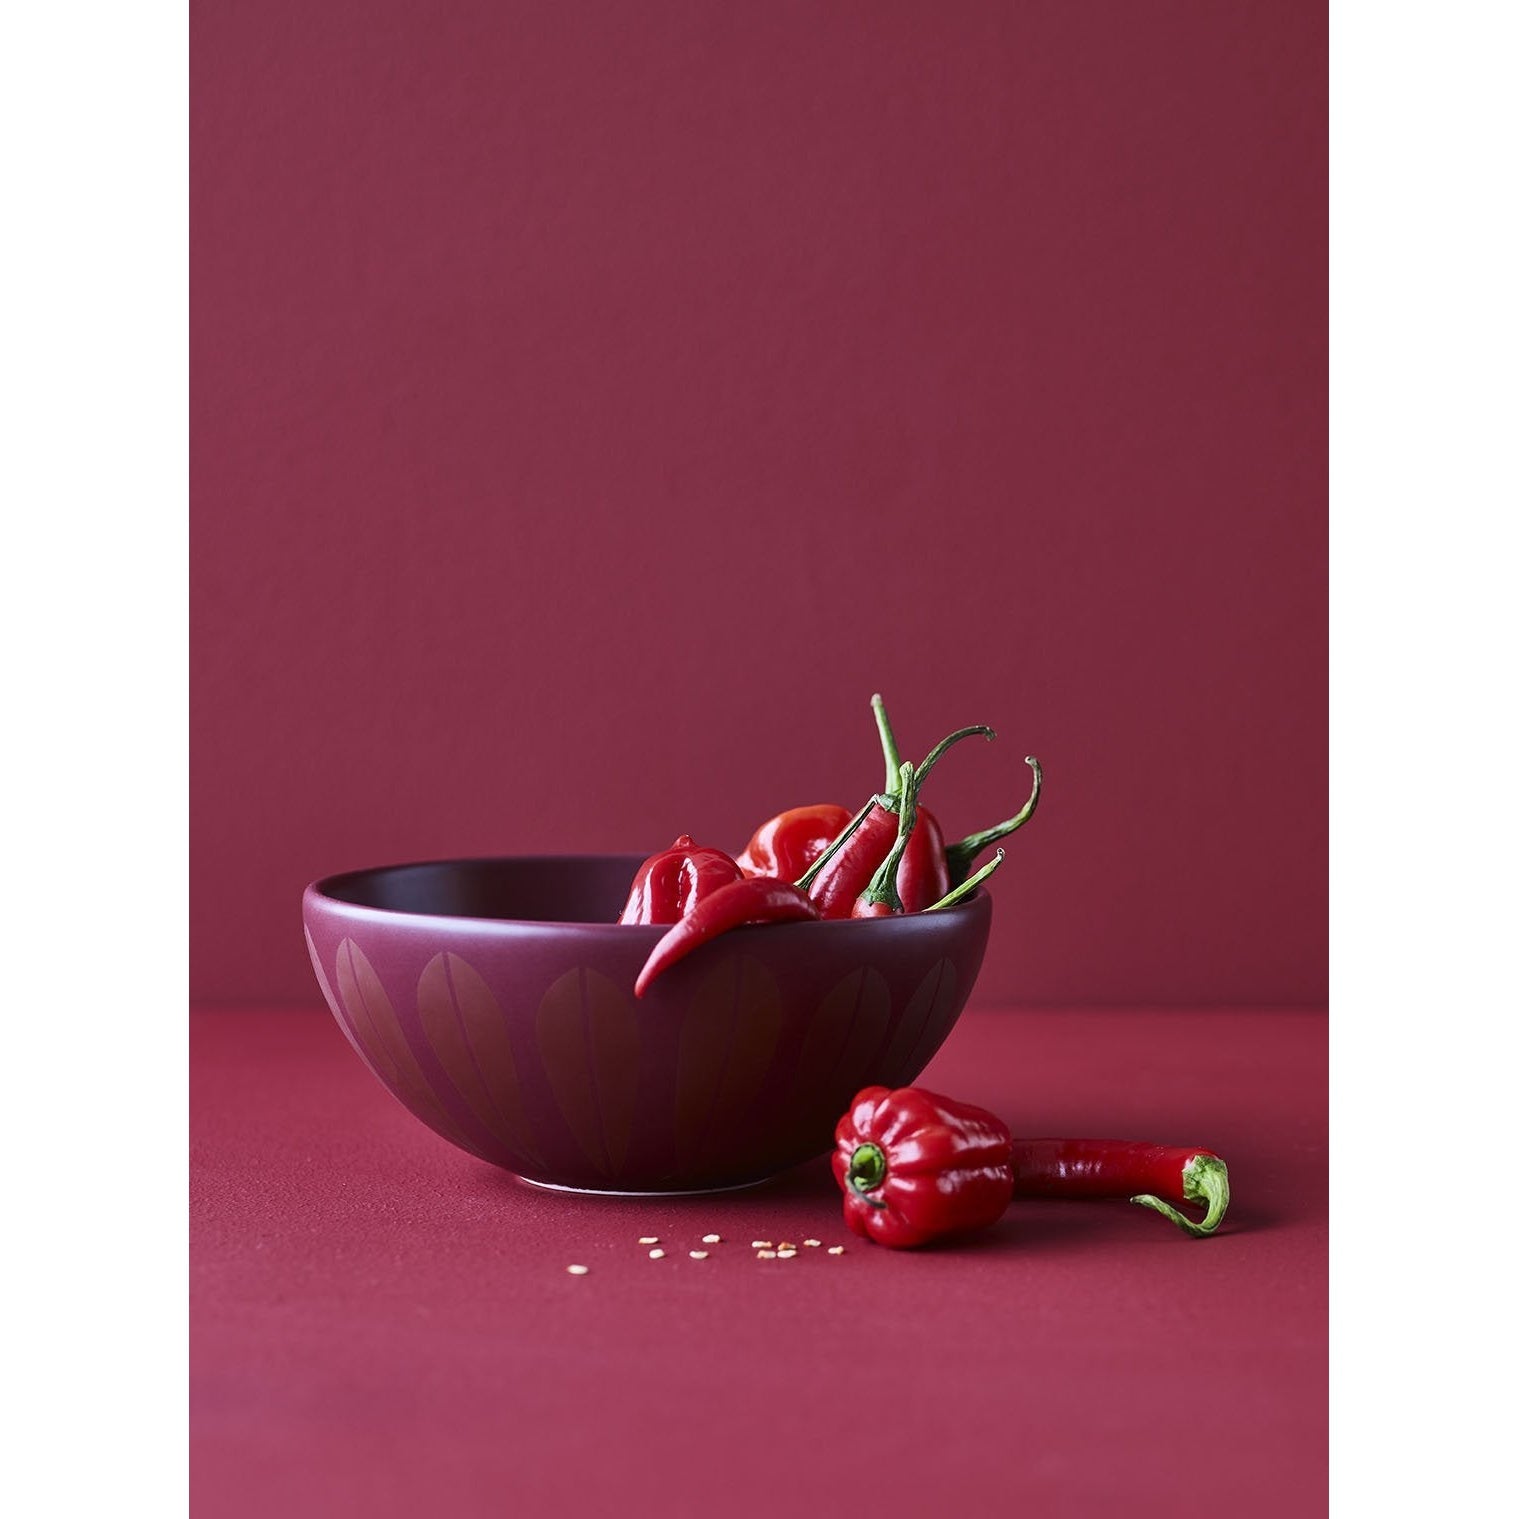 Lucie Kaas Arne Clausen Bowl Dark Red, 18 cm